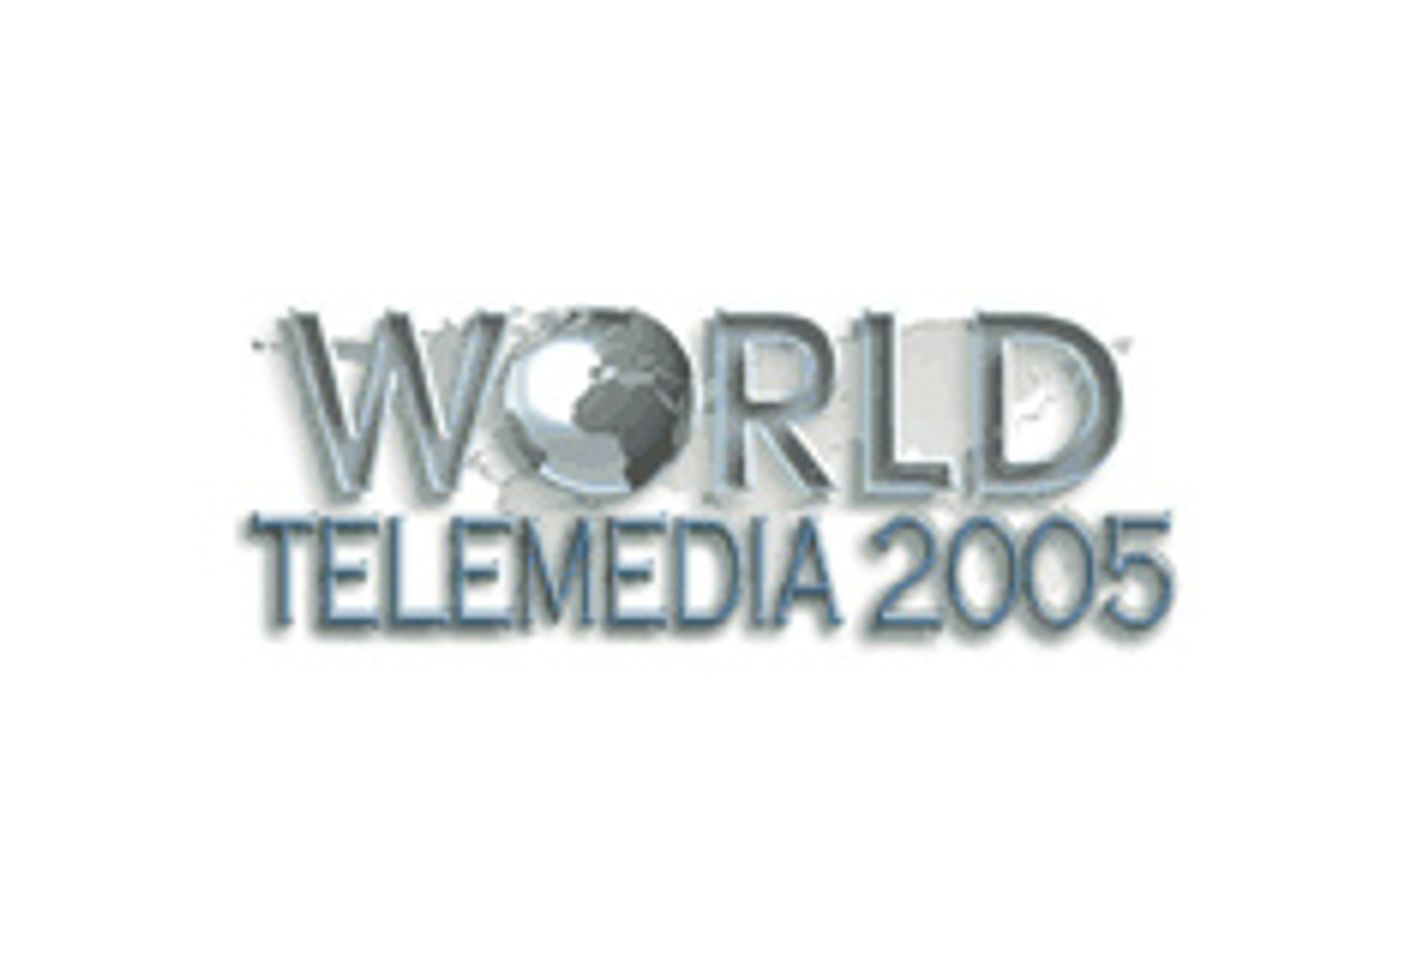 World Telemedia Spotlights Off-Portal Mobile Content